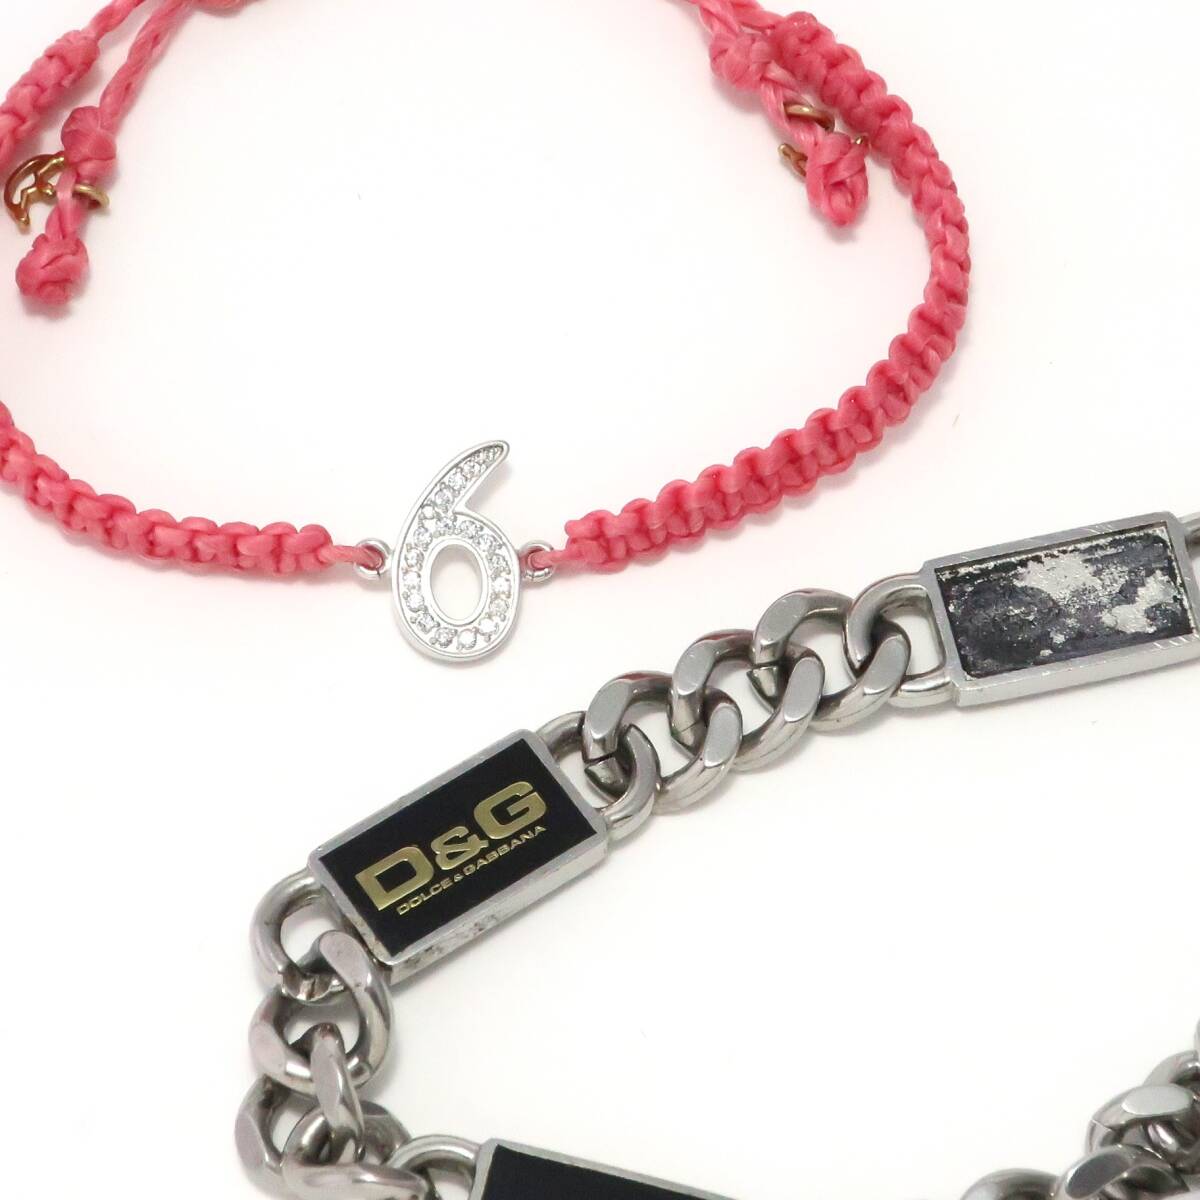  necklace bracele * Vivienne Westwood Emilio Pucci GaGa Milano Dolce & Gabbana other *8 point set summarize 